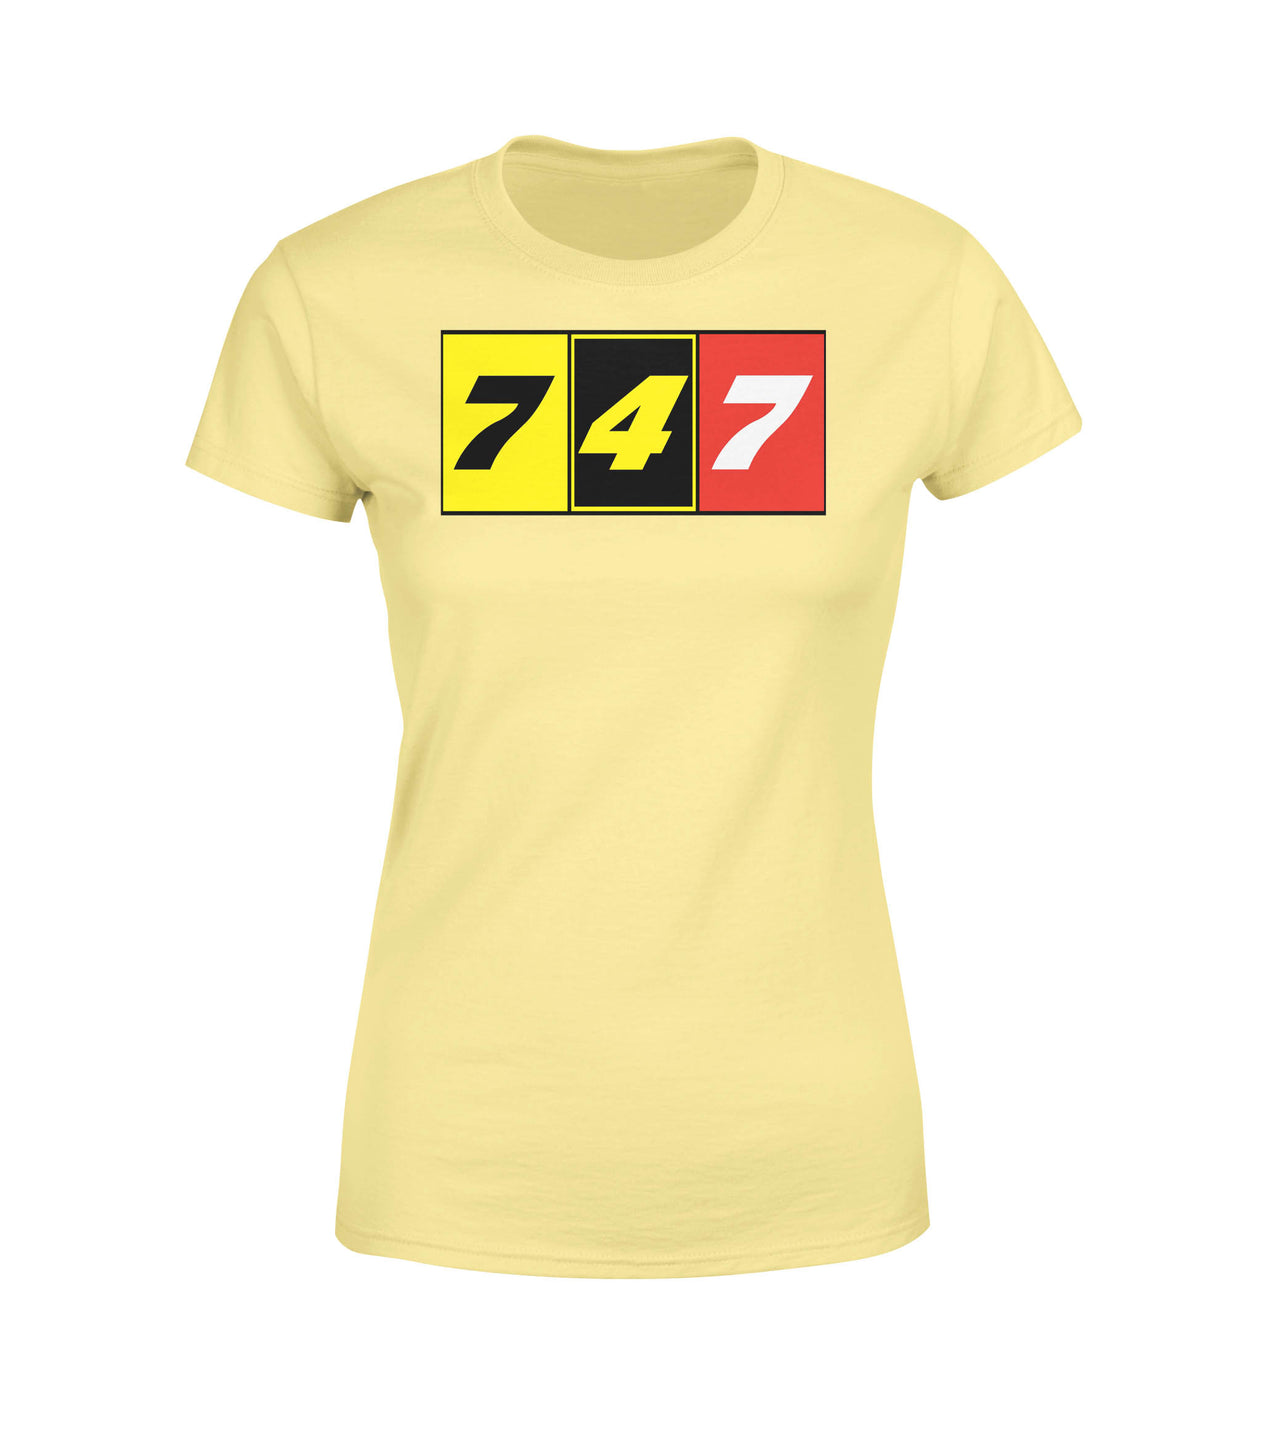 Flat Colourful 747 Designed Women T-Shirts